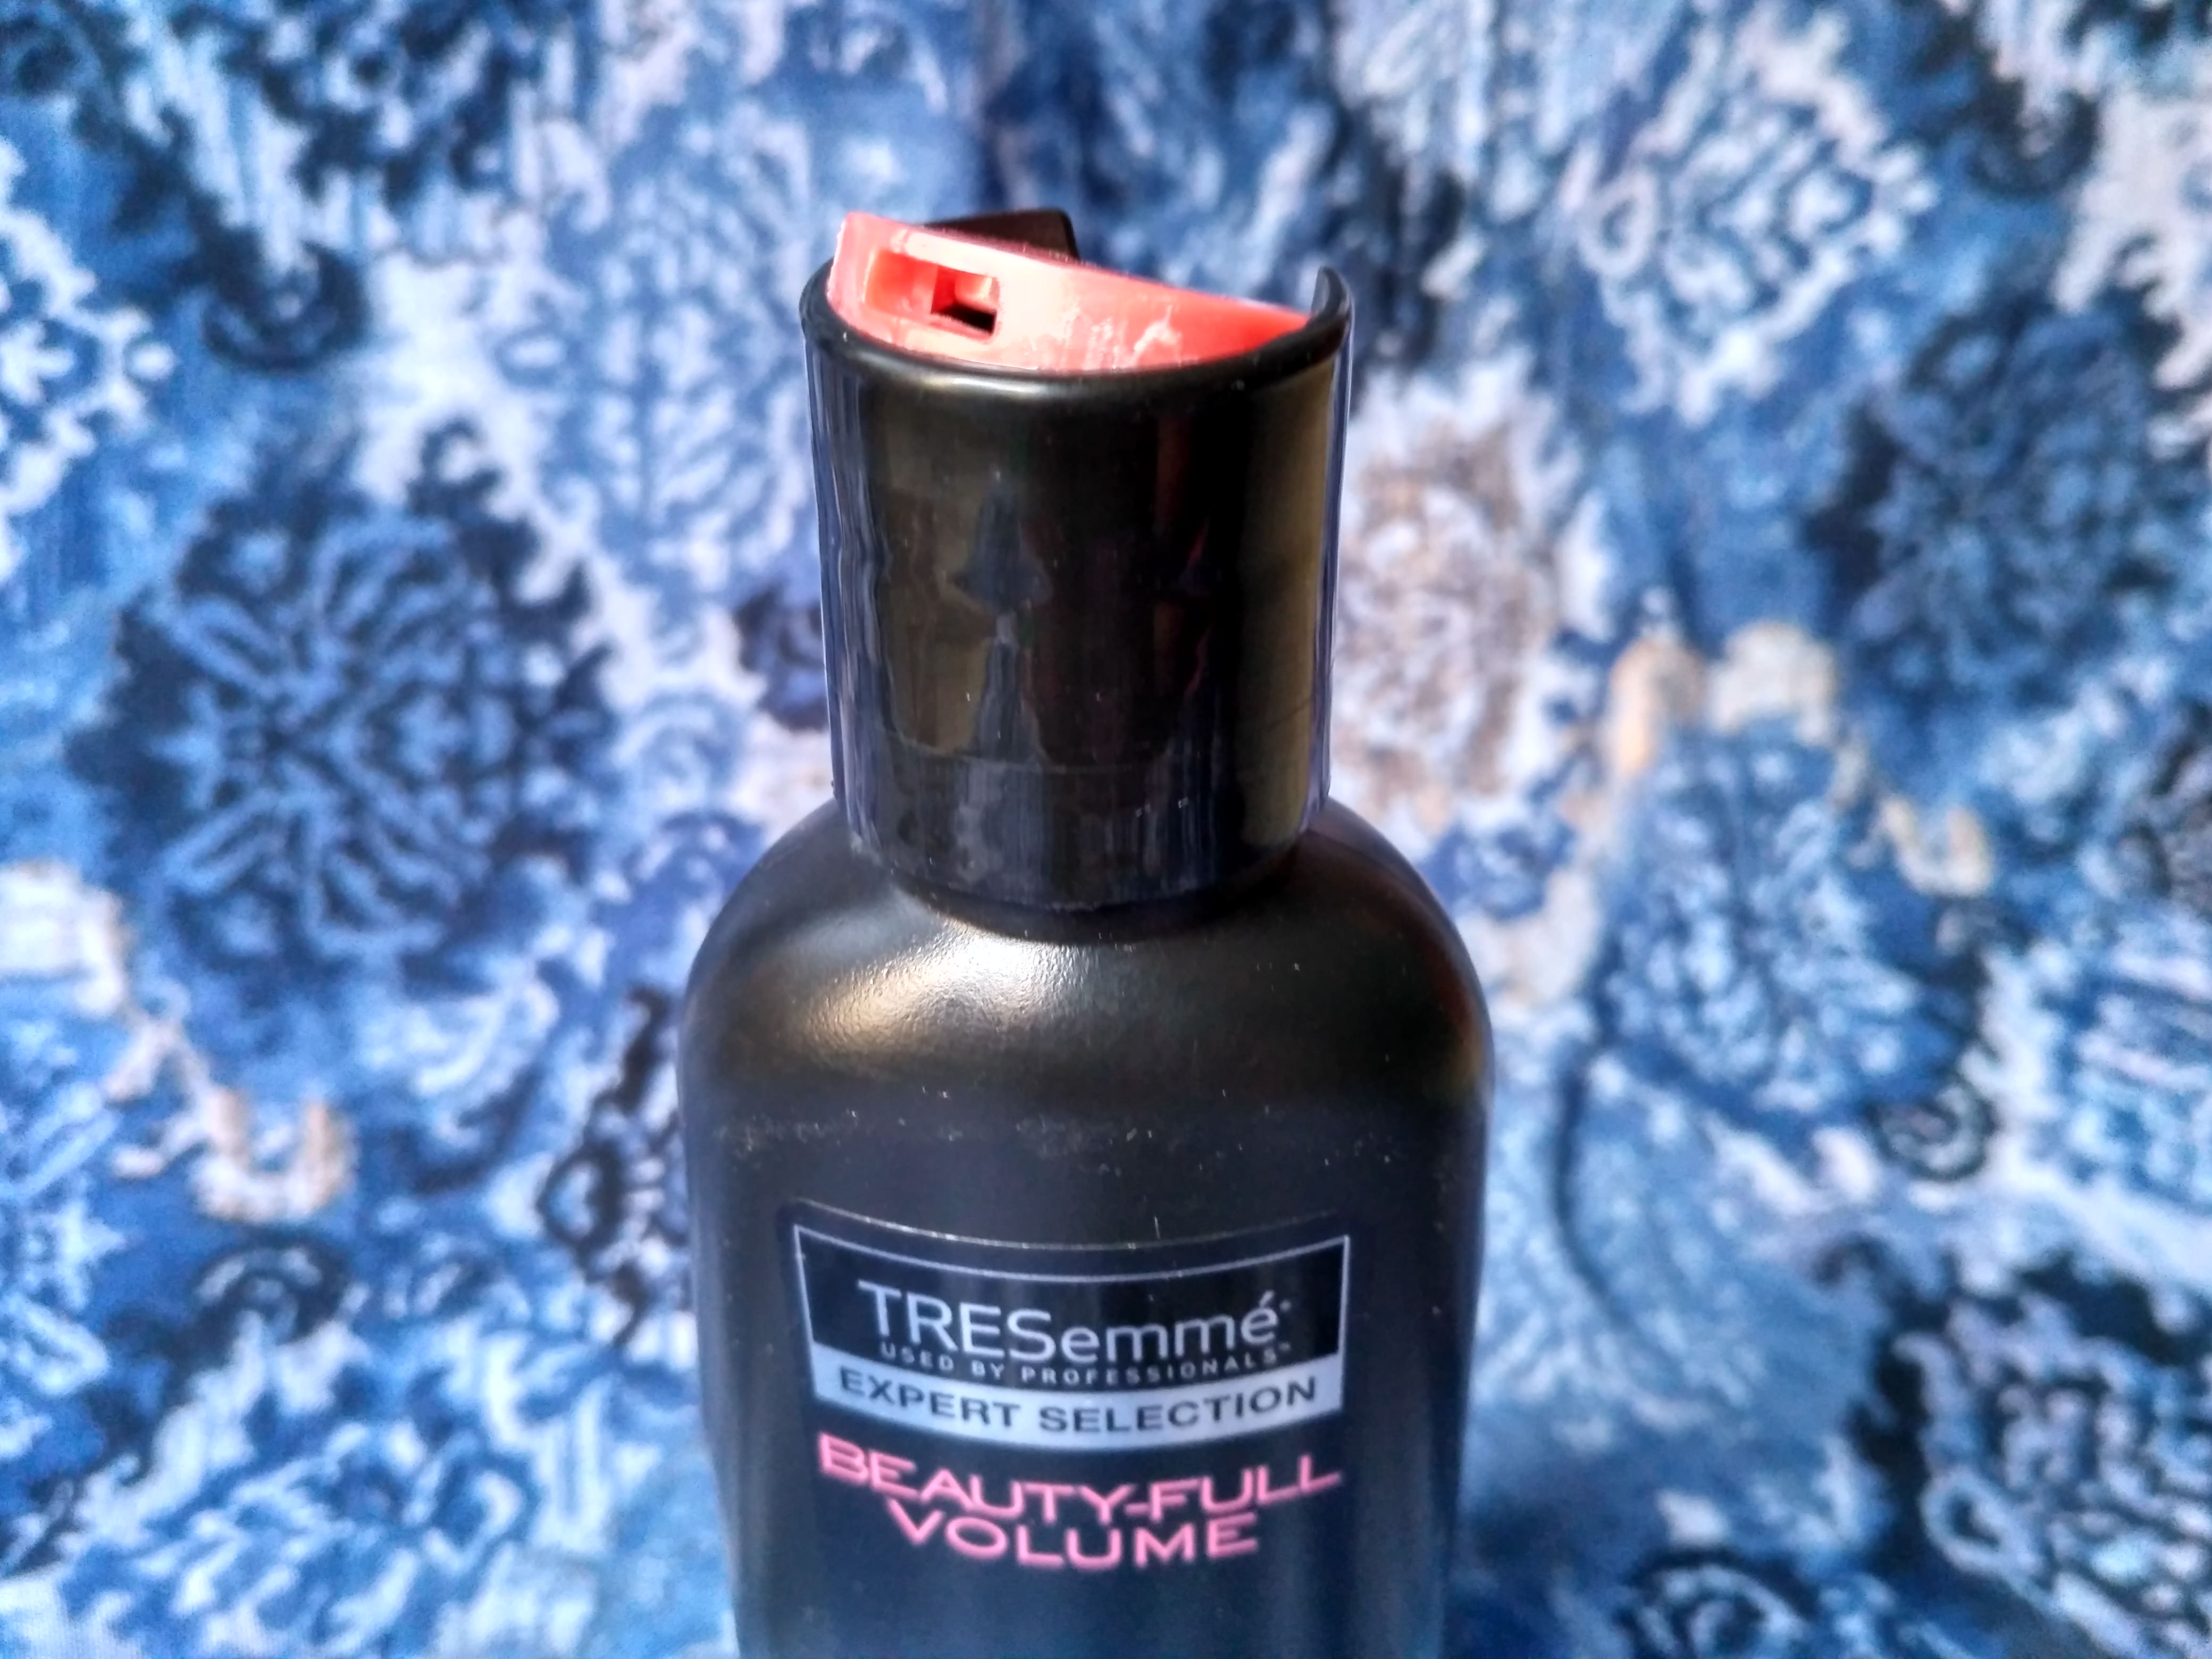 TRESemme Beauty-Full Volume Shampoo Review